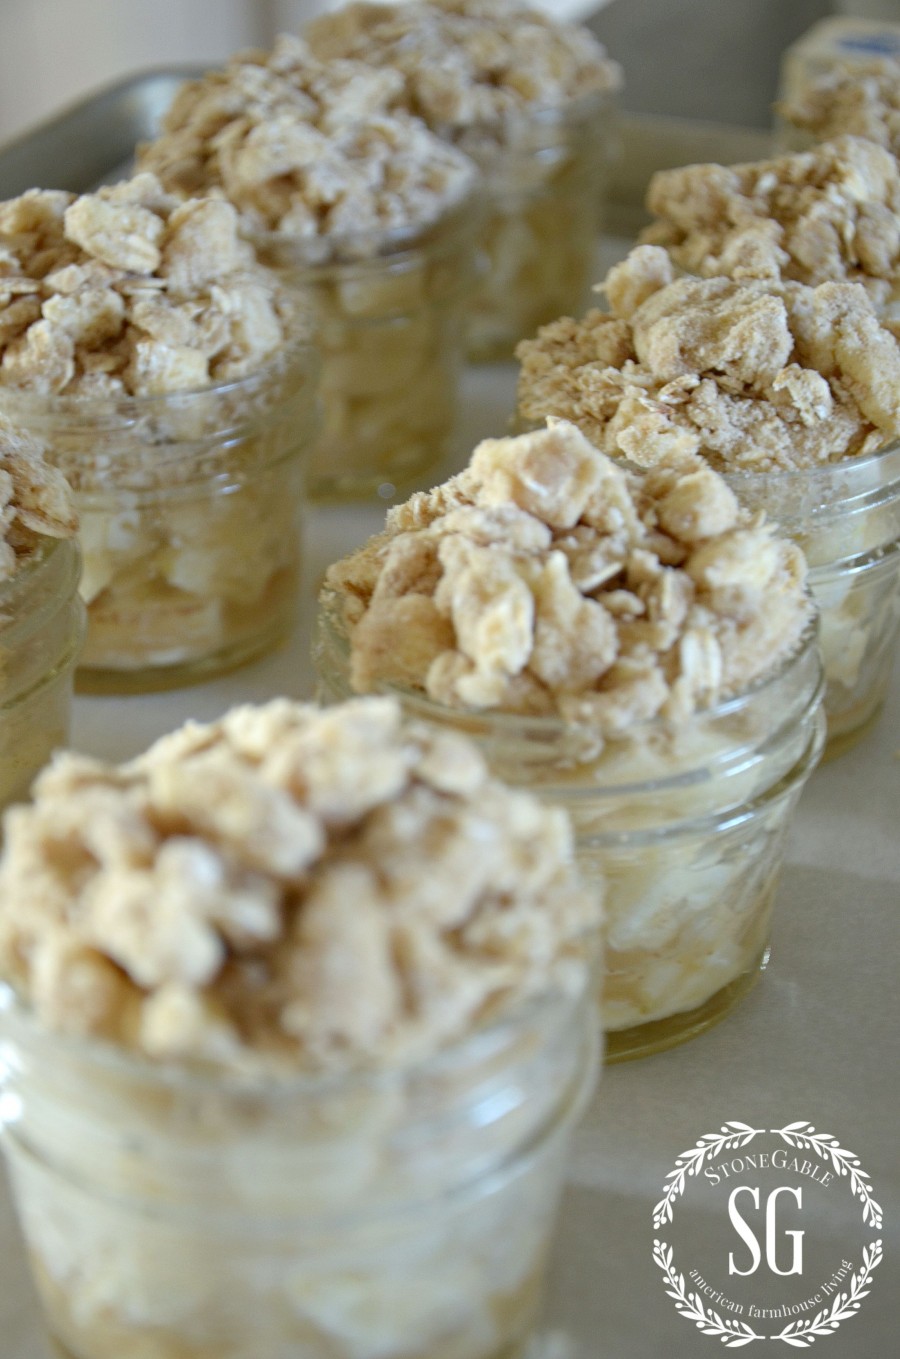 APPLE CRISP IN MASON JARS-Classic, scrumptious apple crisp in cute jars!- A very fun fall dessert-stonegableblog.com